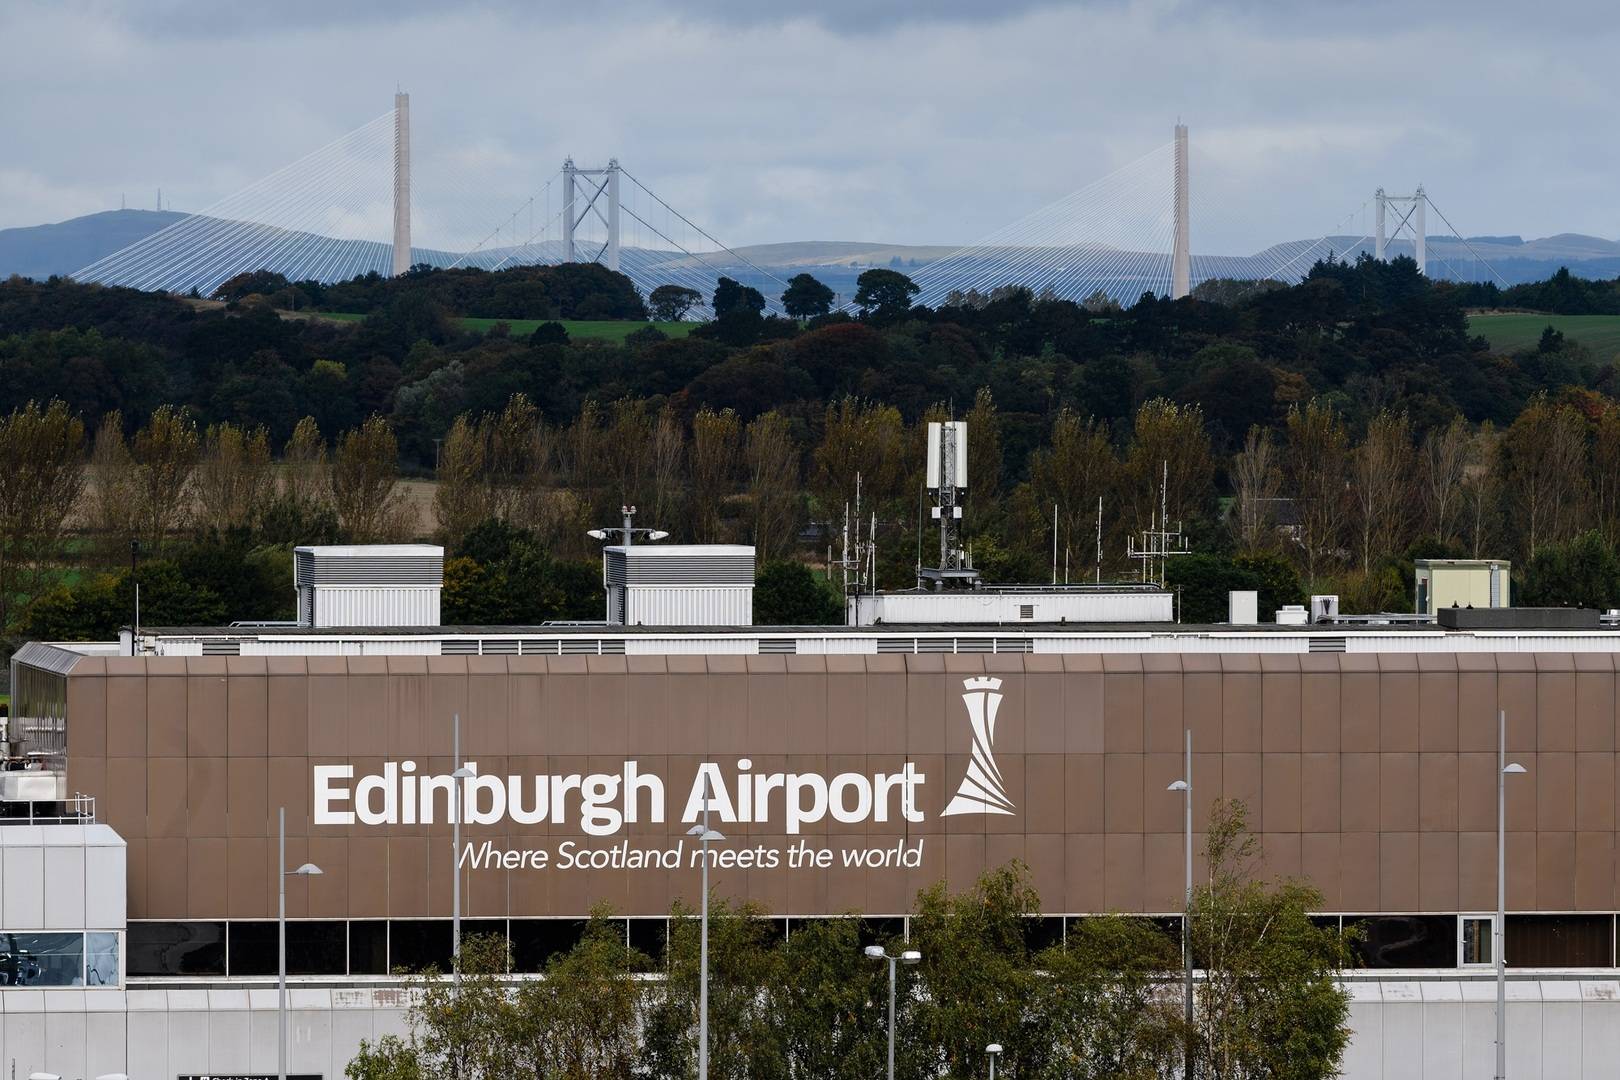 Edinburgh Airport with Bridges in background,©Edinburgh Airport